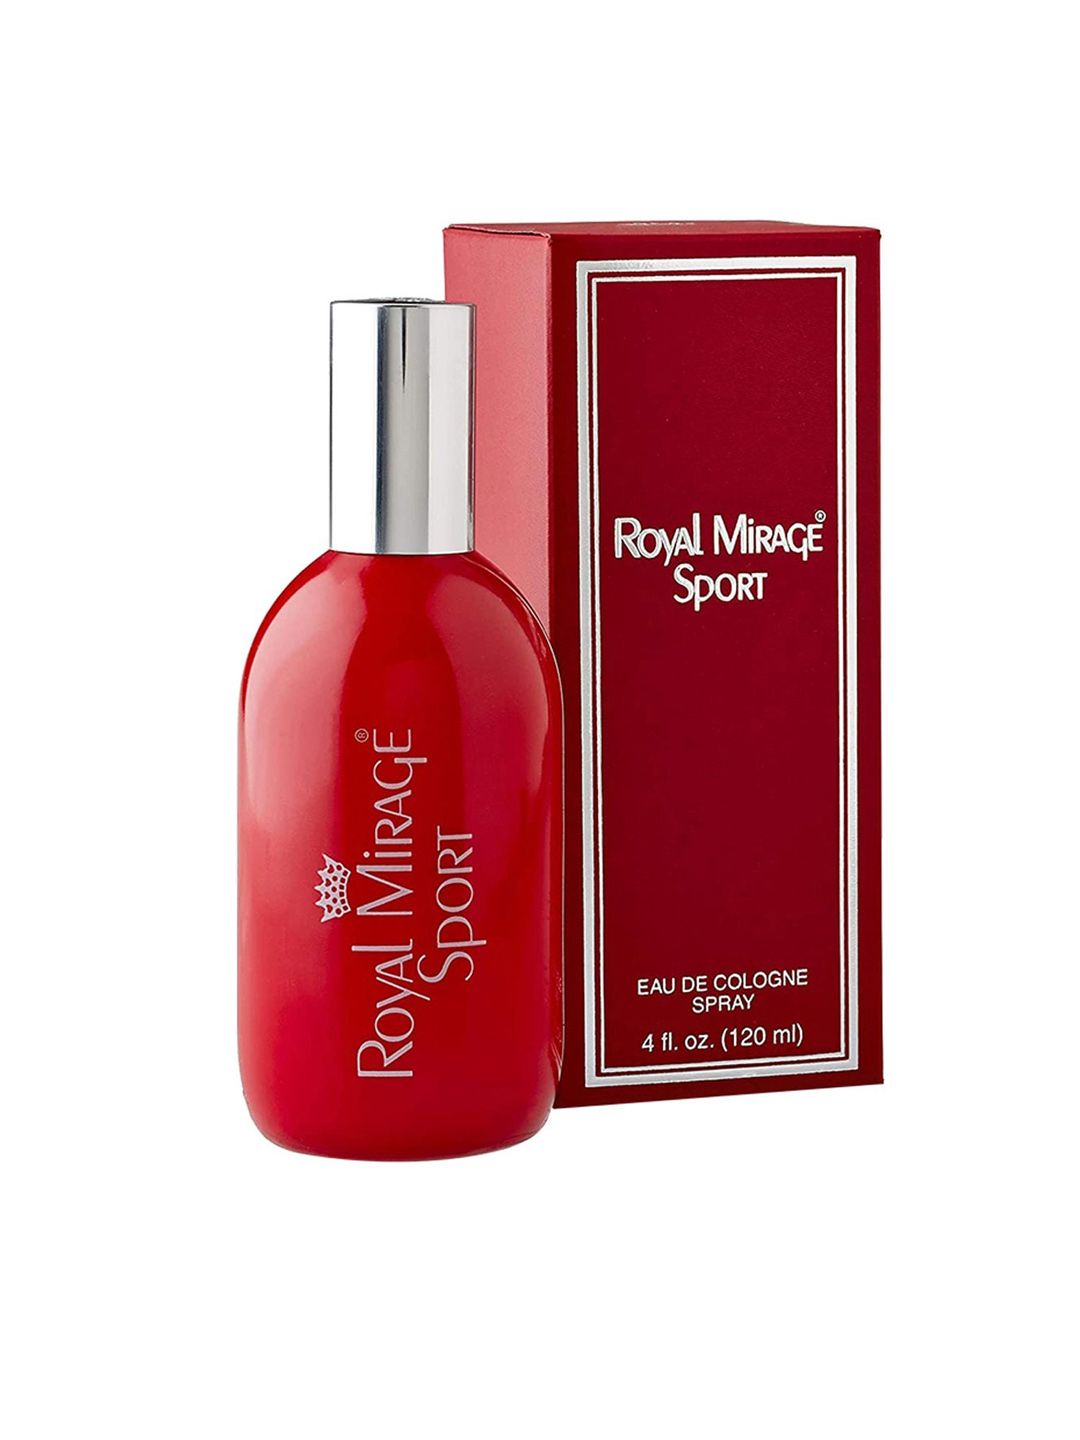 Royal Mirage Sport Eau De Cologne Perfume For Men 120ml Price in India